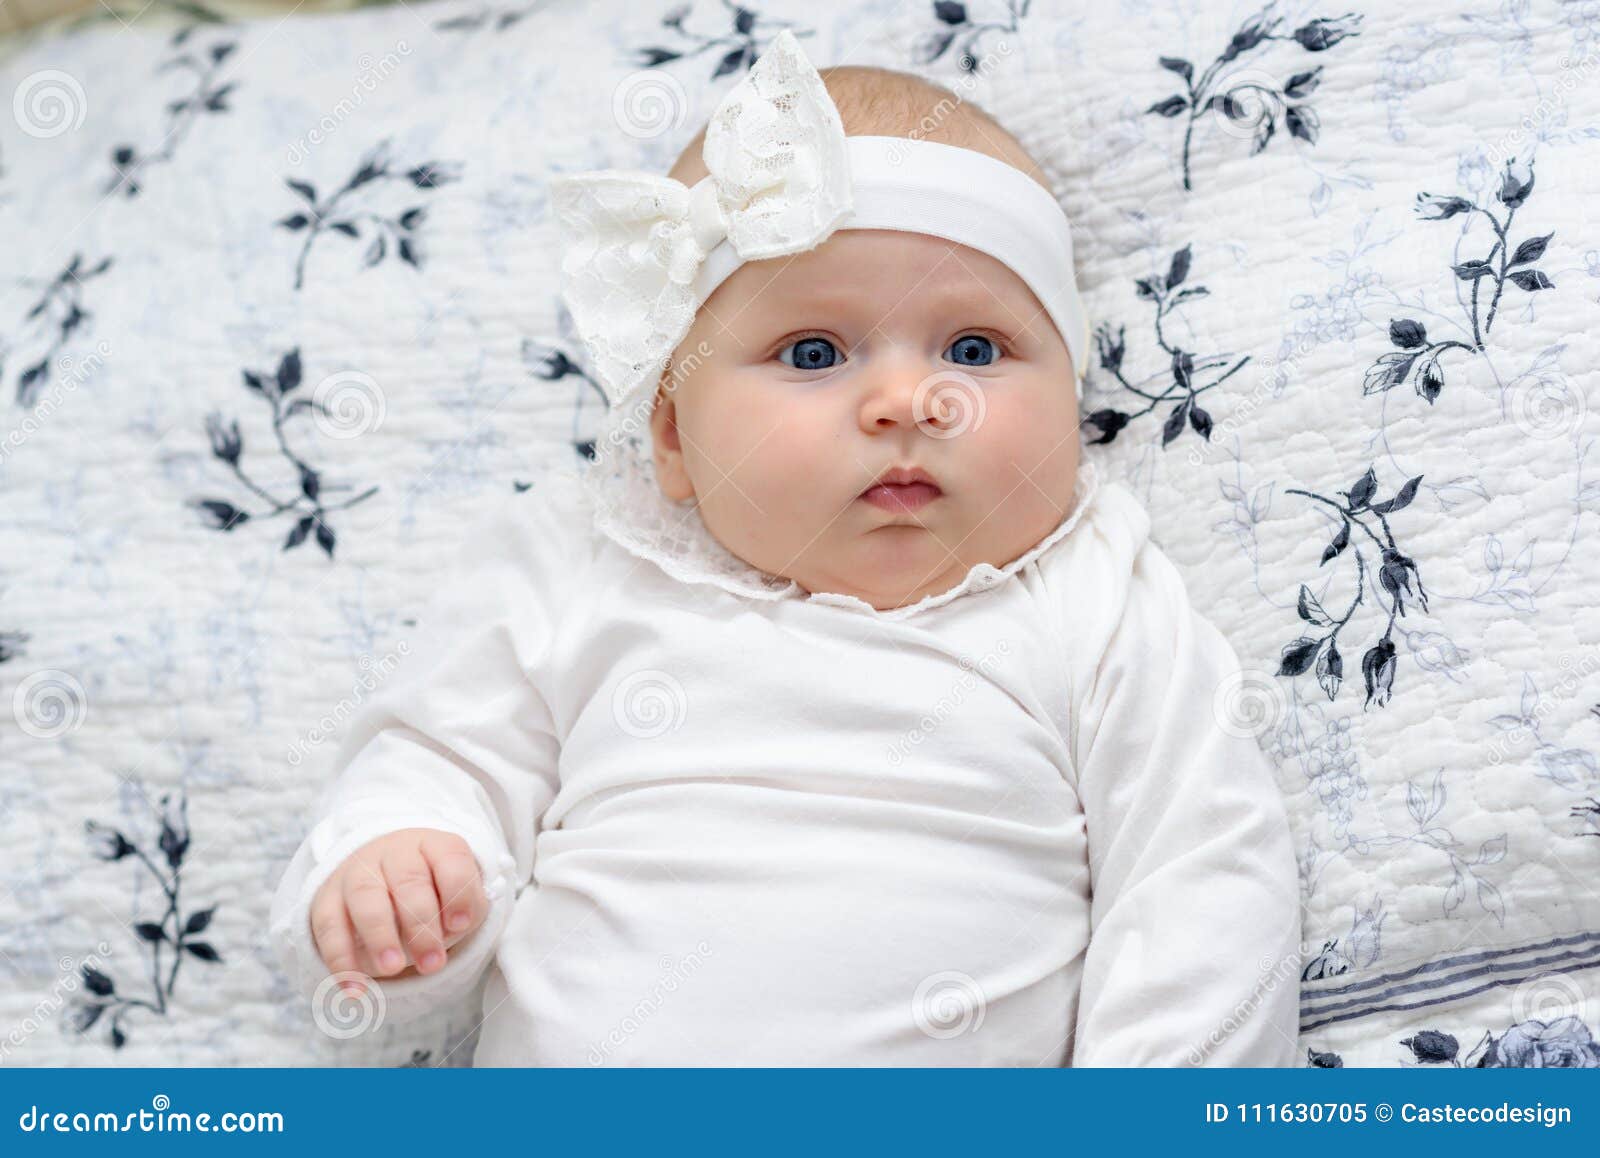 Cute Baby Girl Portrait. Sweet Little Girl All Dressed in White ...